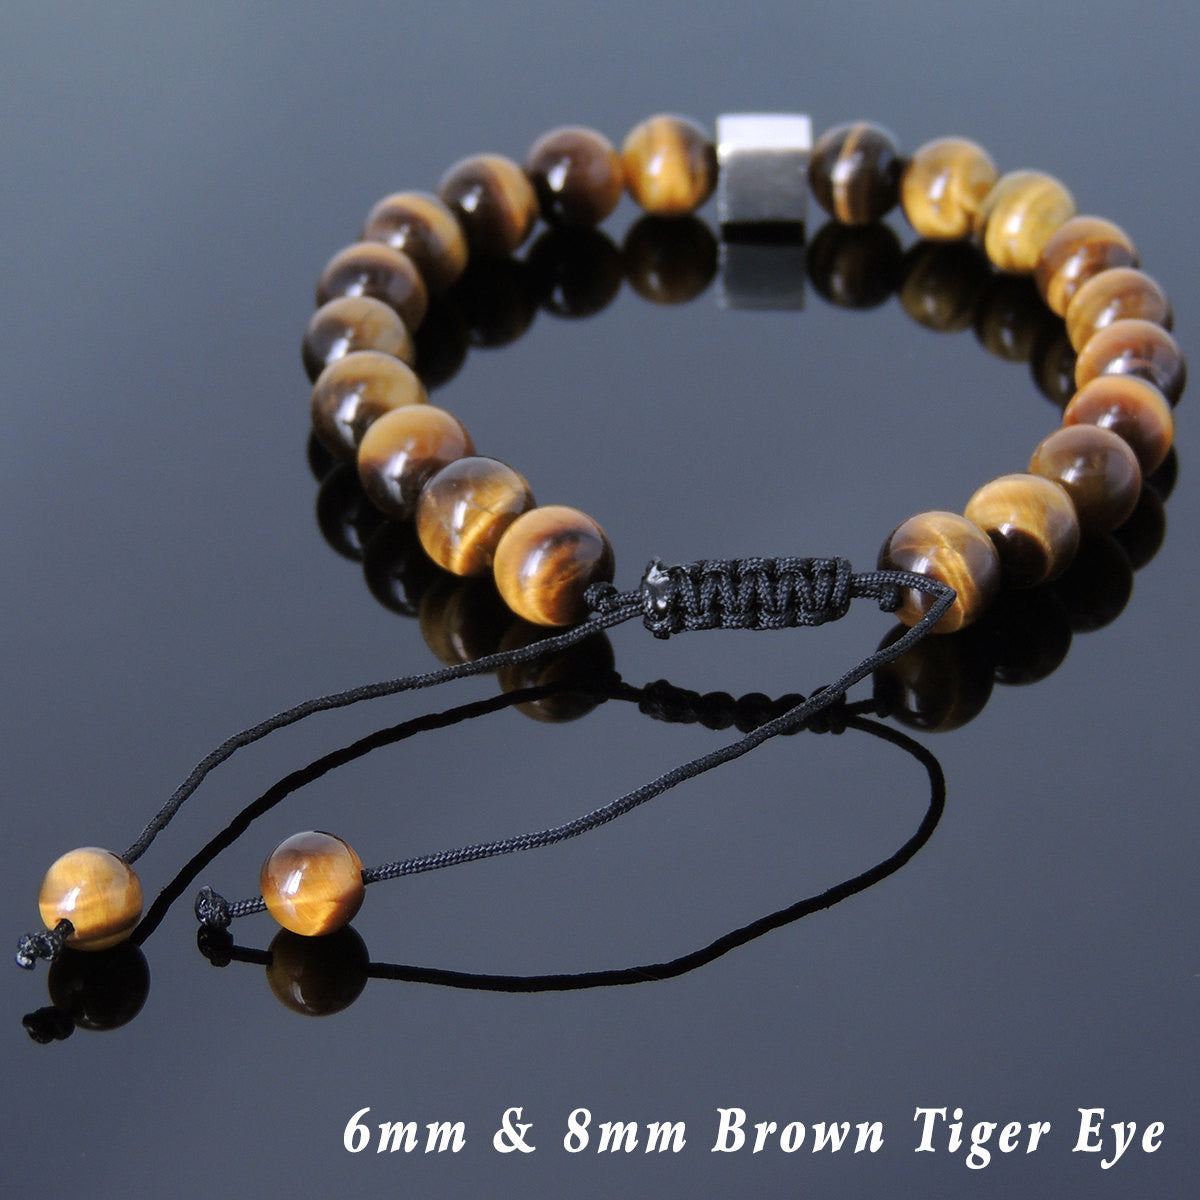 Brown Tiger Eye Adjustable Braided Gemstone Bracelet with S925 Sterling Silver Cube Bead - Handmade by Gem & Silver BR801